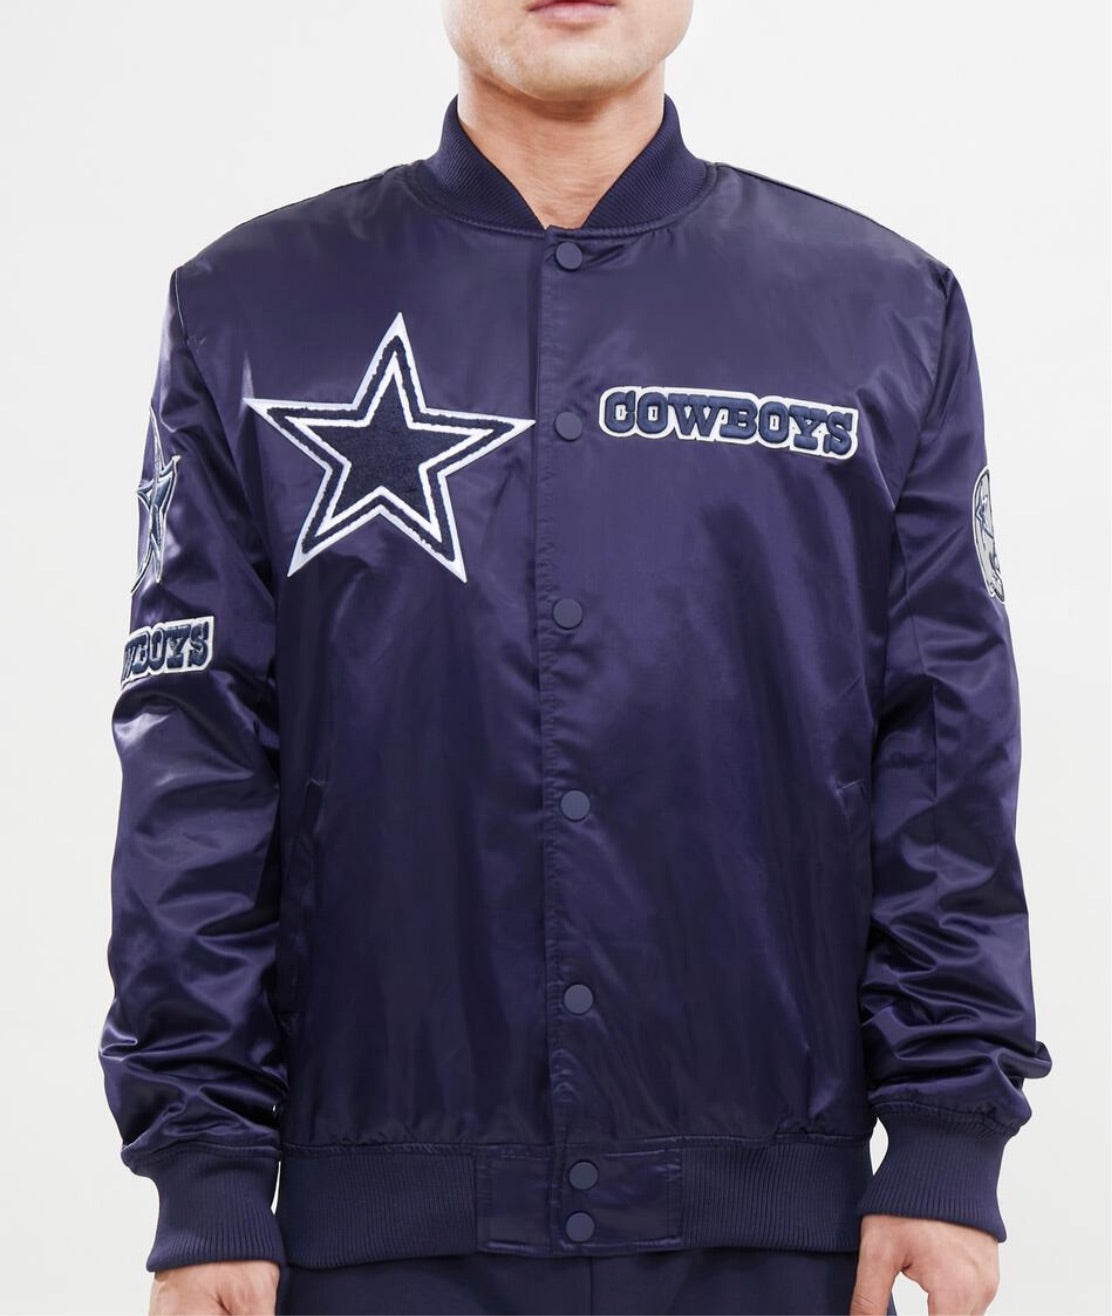 Men’s Pro Standard Dallas Cowboys Jacket